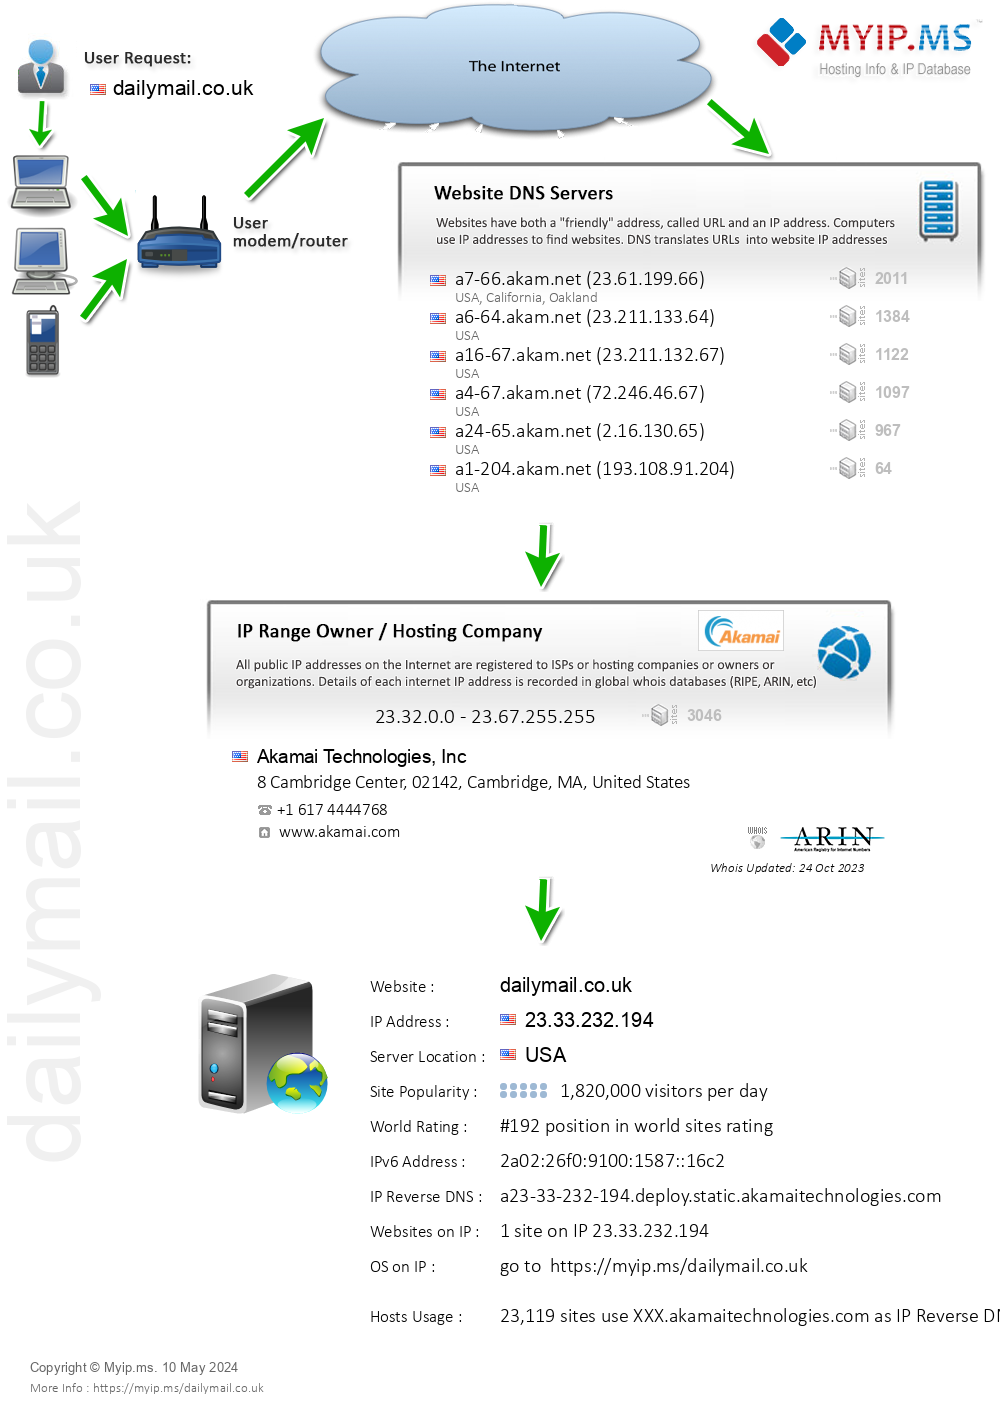 Dailymail.co.uk - Website Hosting Visual IP Diagram